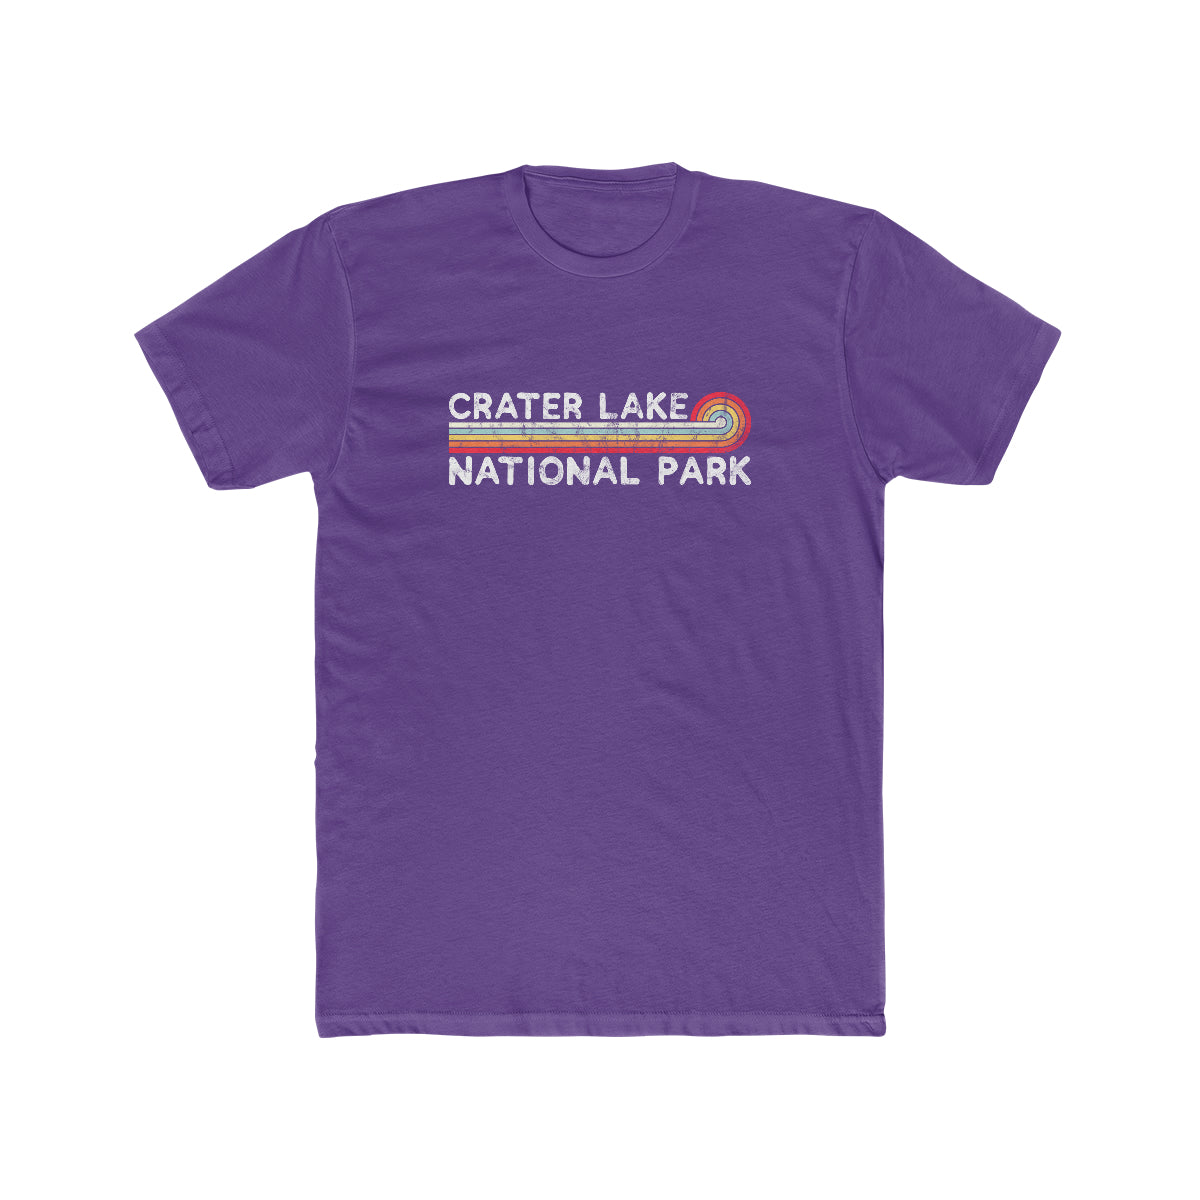 Crater Lake National Park T-Shirt - Vintage Stretched Sunrise